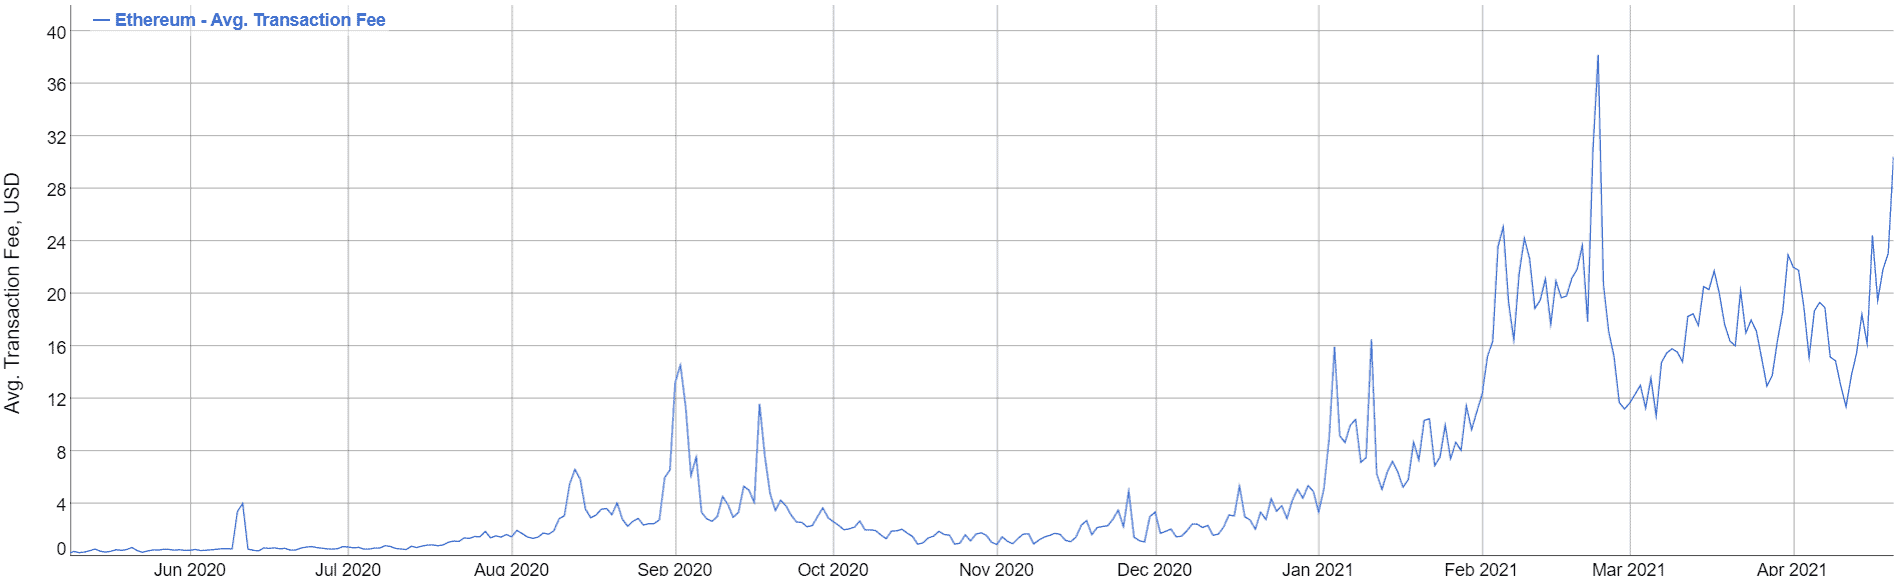 ethereum transaction fee spike